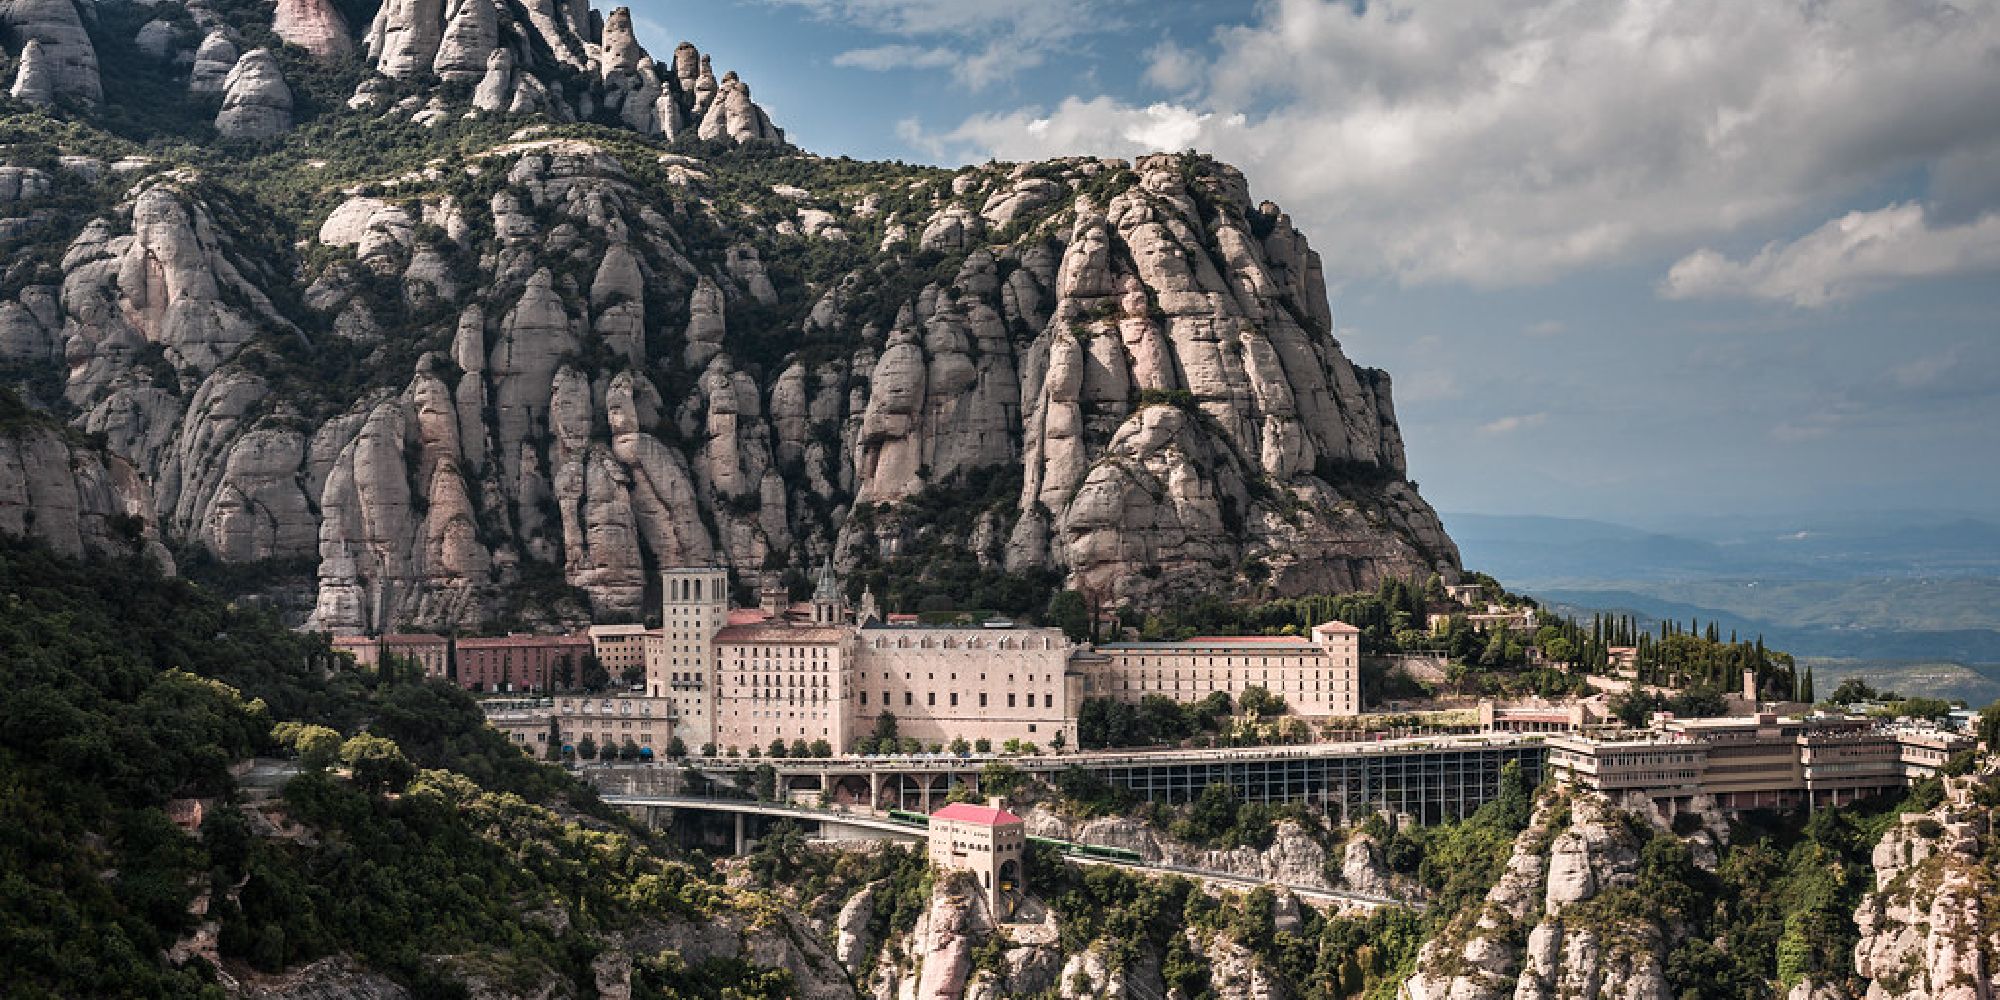 The Santa Maria de Montserrat Abbey in Spain